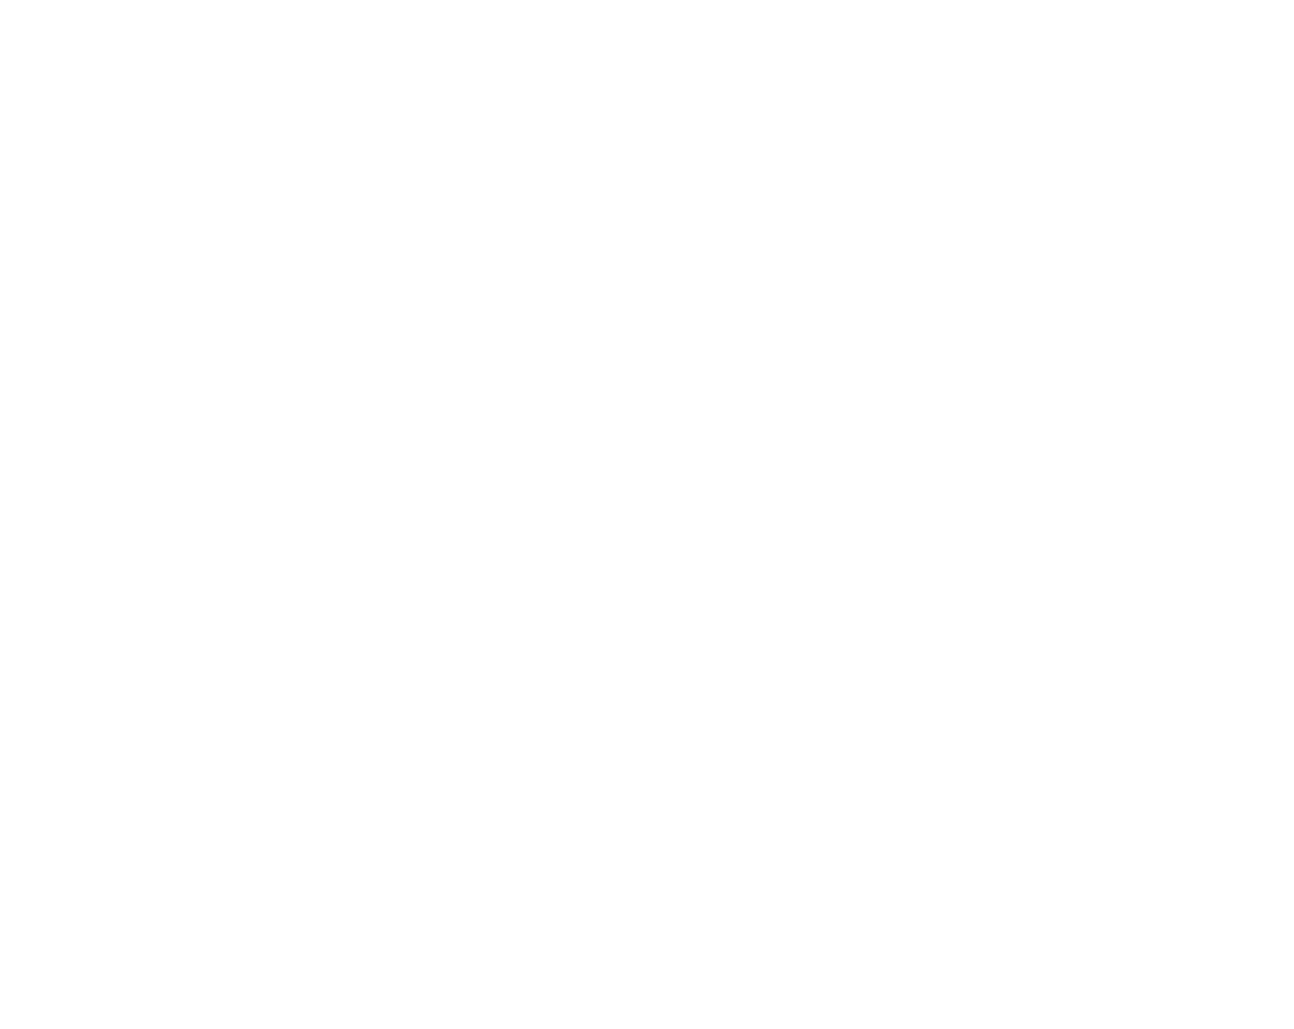 LegendsClubLogo-White